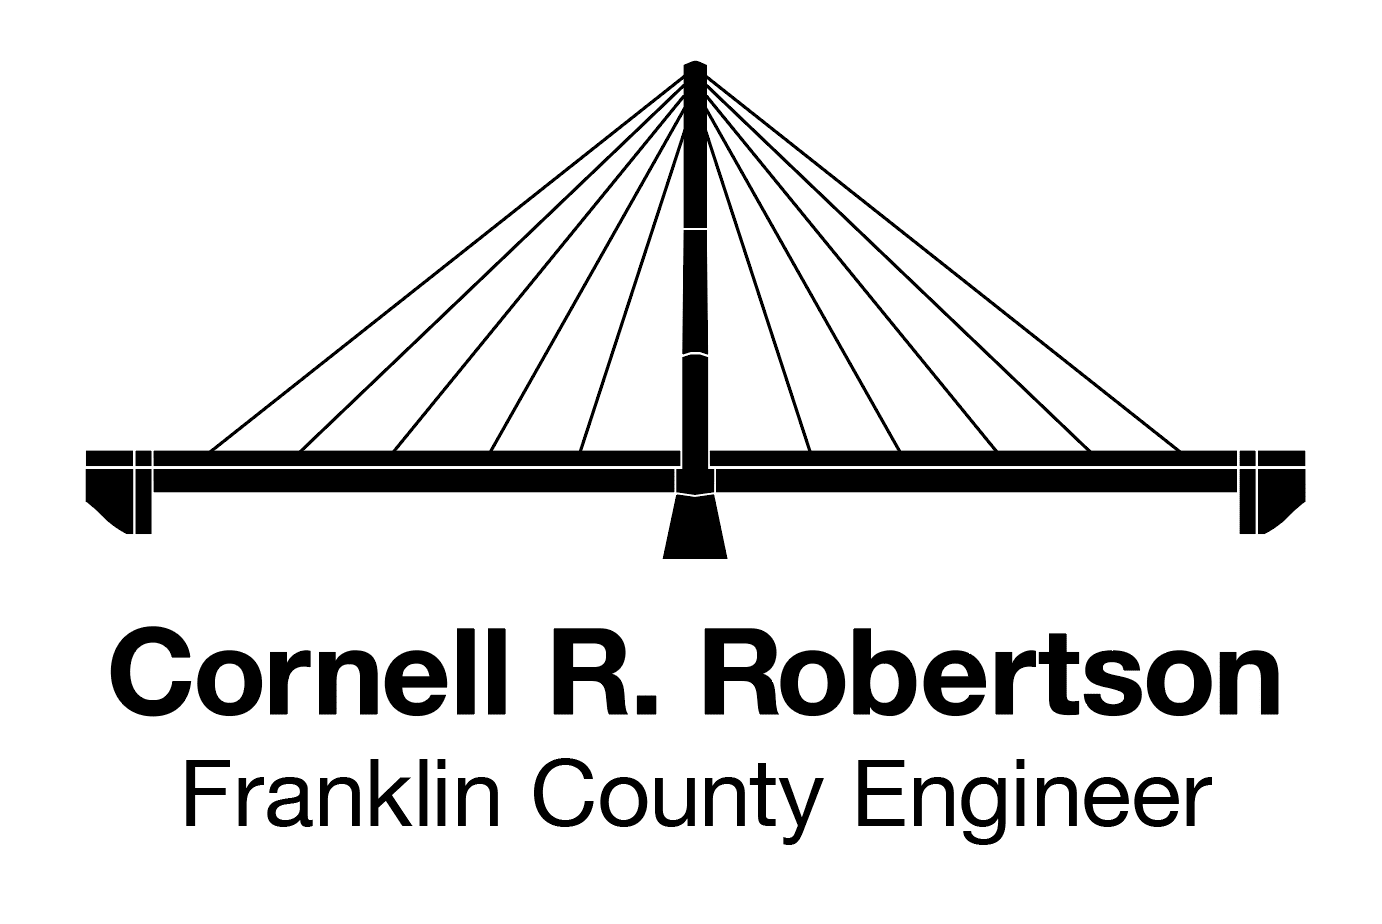 Franklin County Engineer bridge